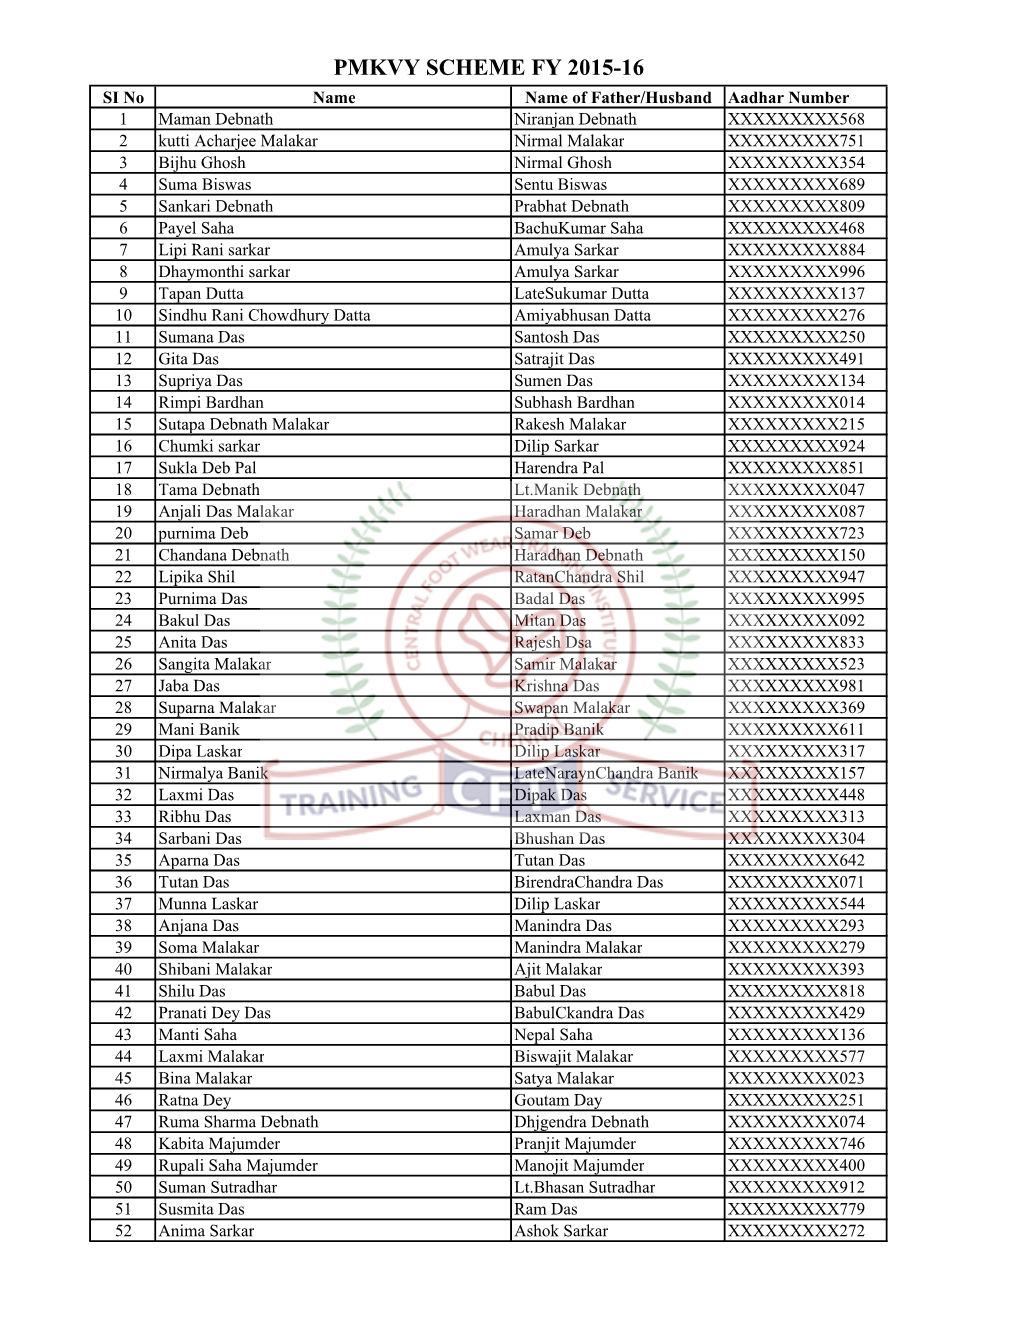 PMKVY 3212 Candidates Certified List FY 2015-16.Xlsx